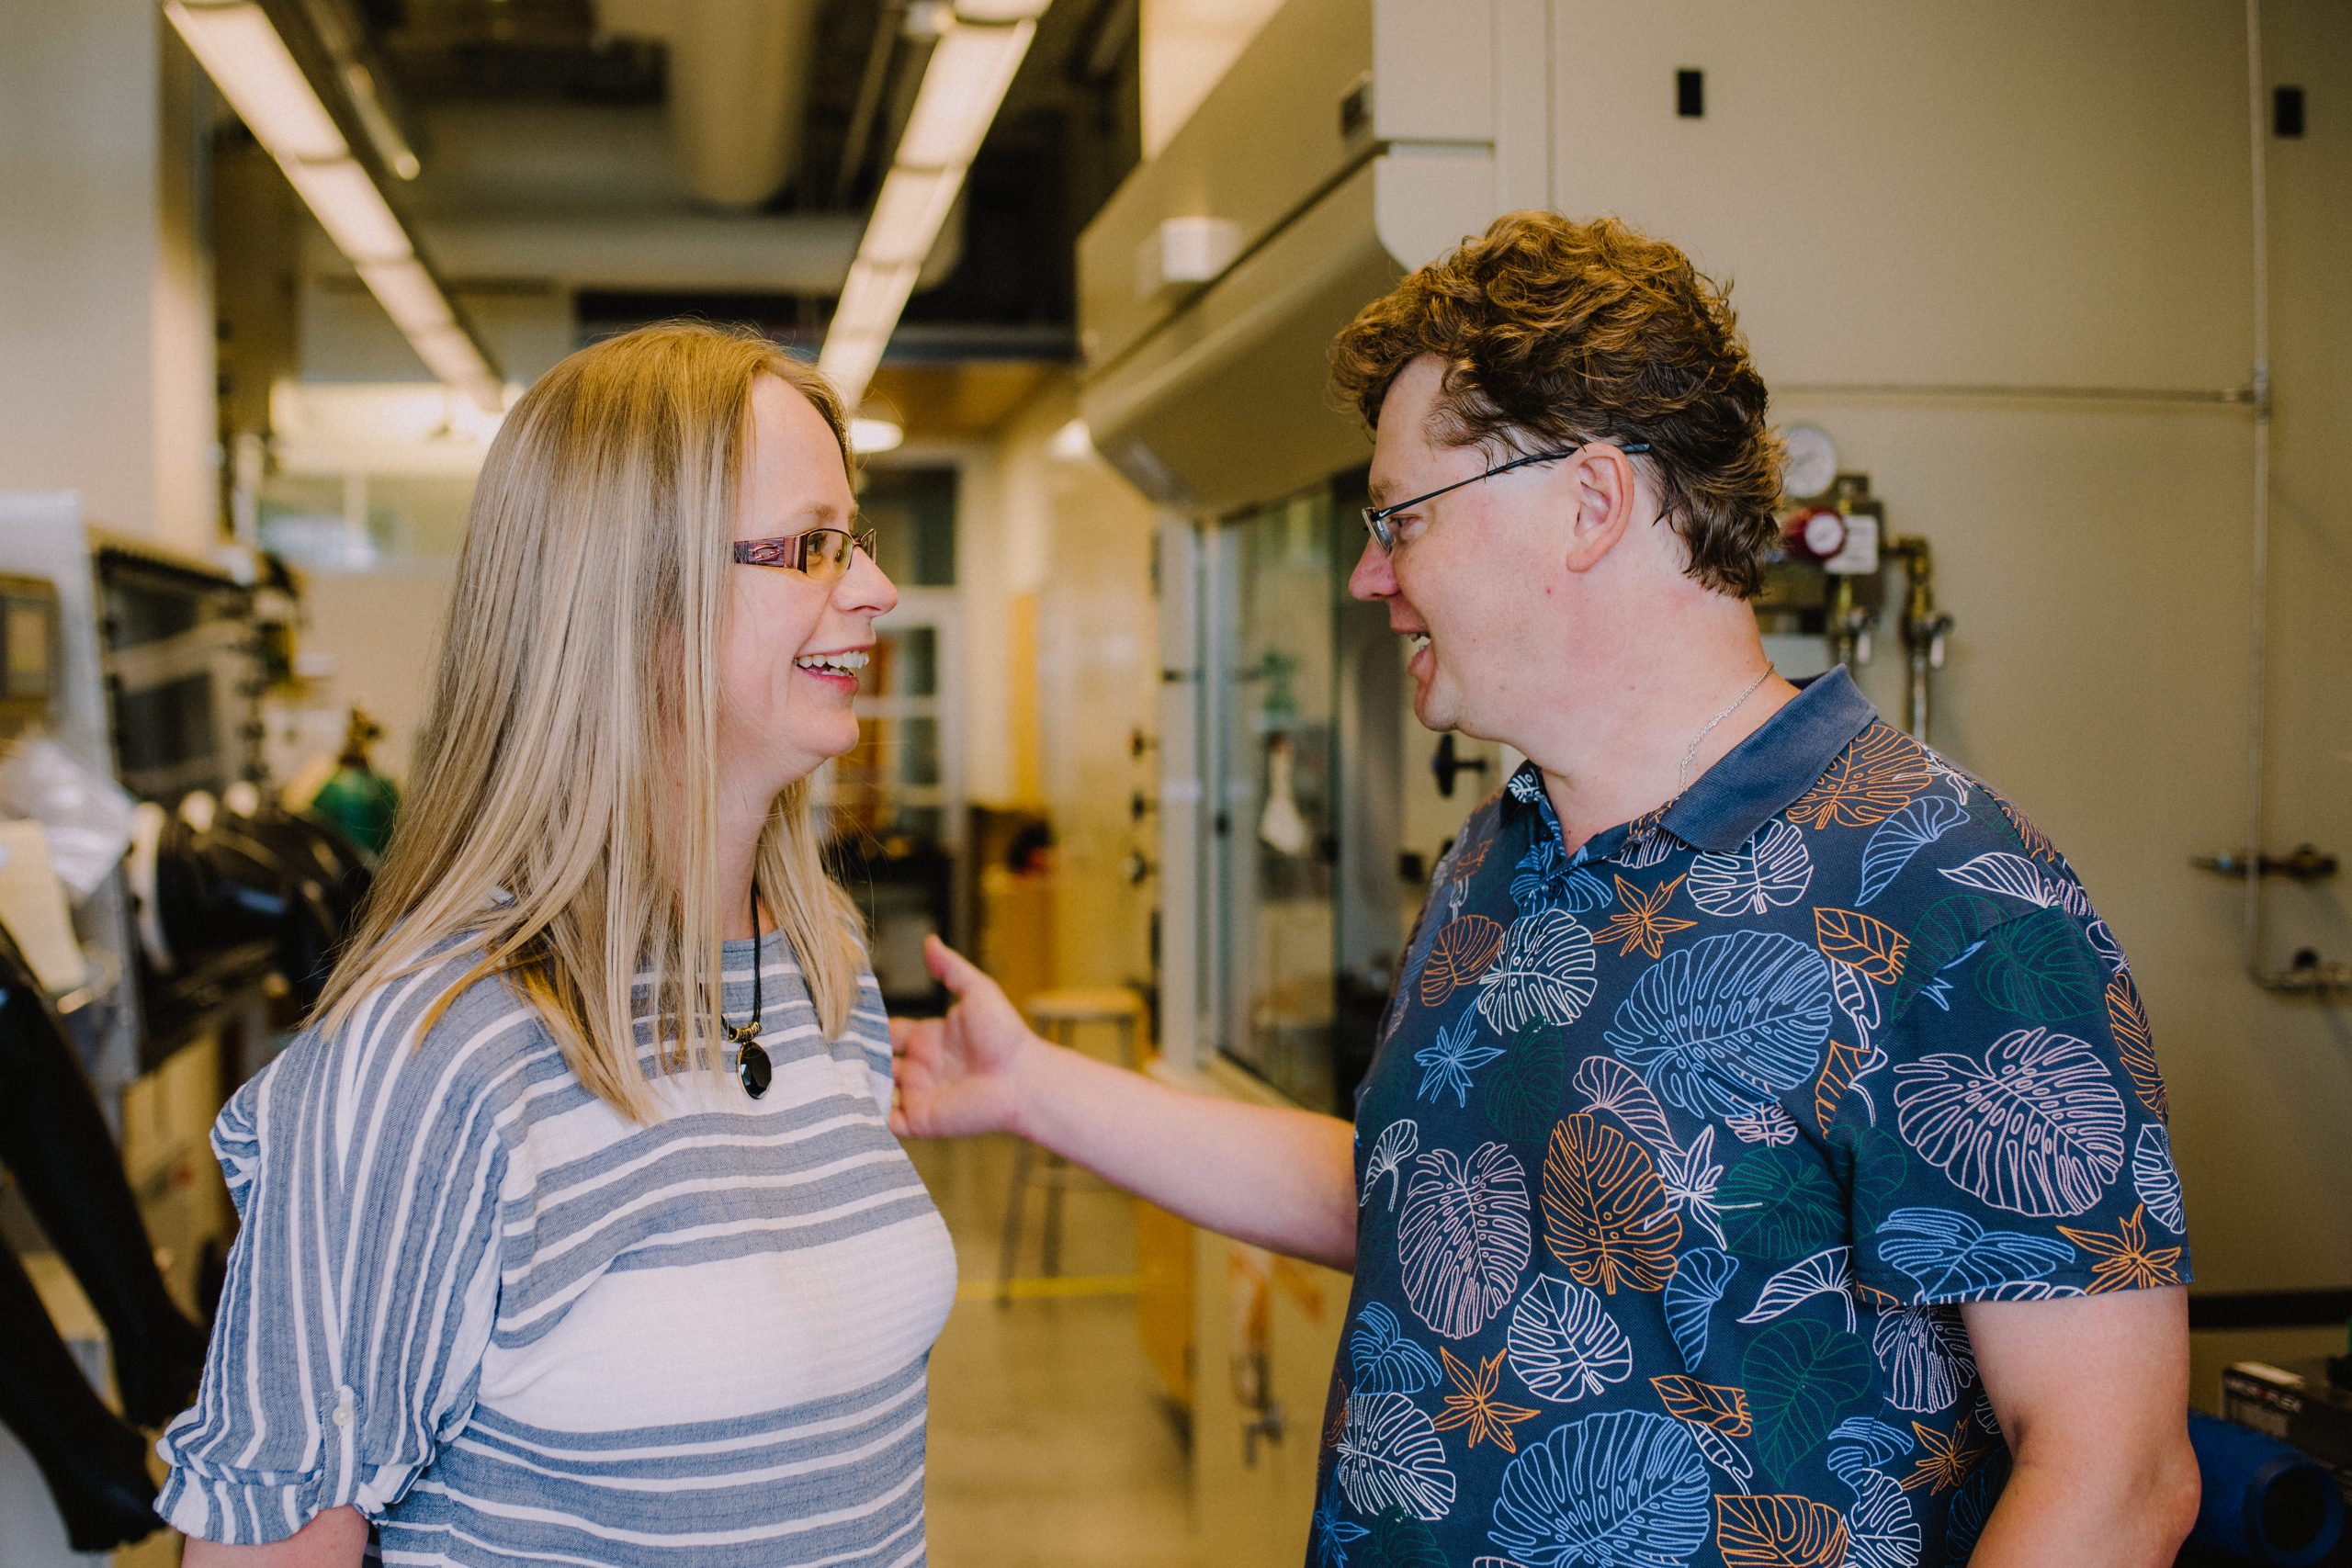 Julia Zaikina and Kirill Kovnir have a lively conversation in the Zaikina chemistry lab